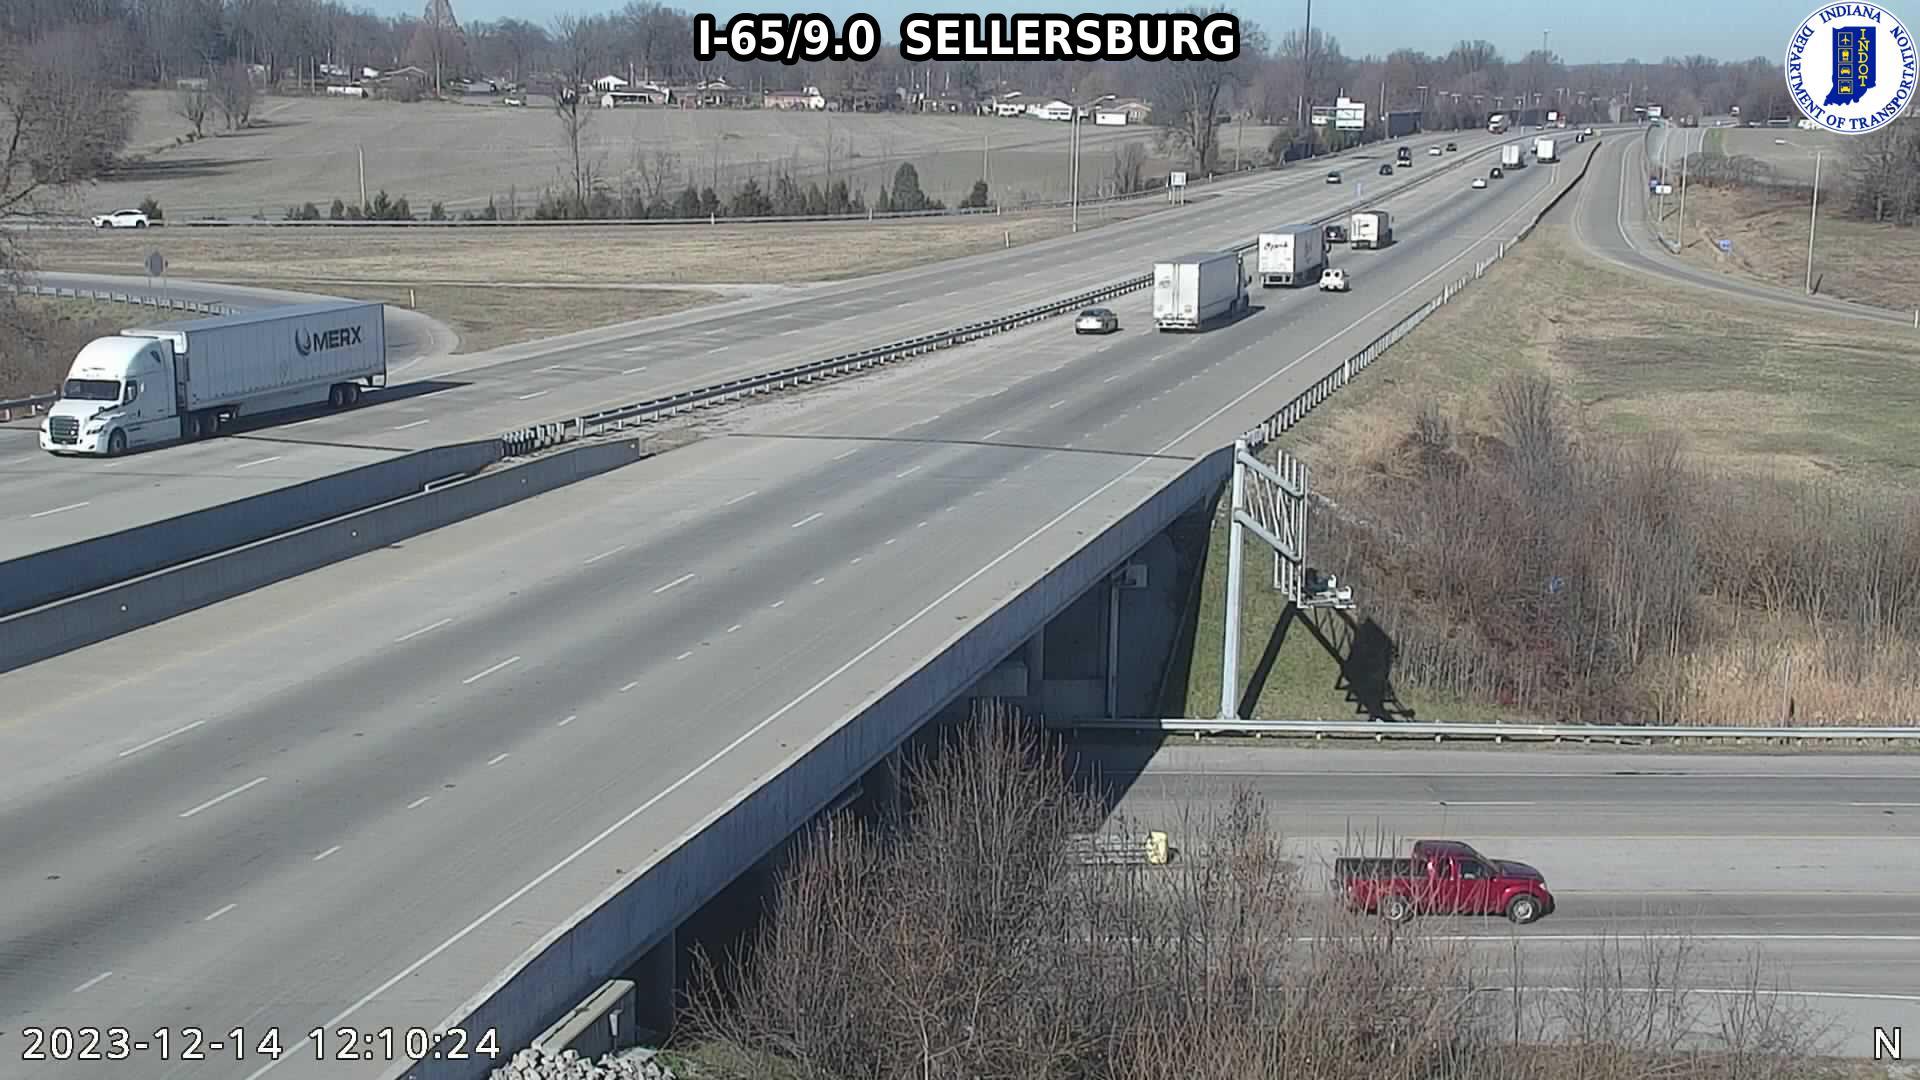 Traffic Cam Sellersburg: I-65: I-65/9.0 - I-65/9.0 Player